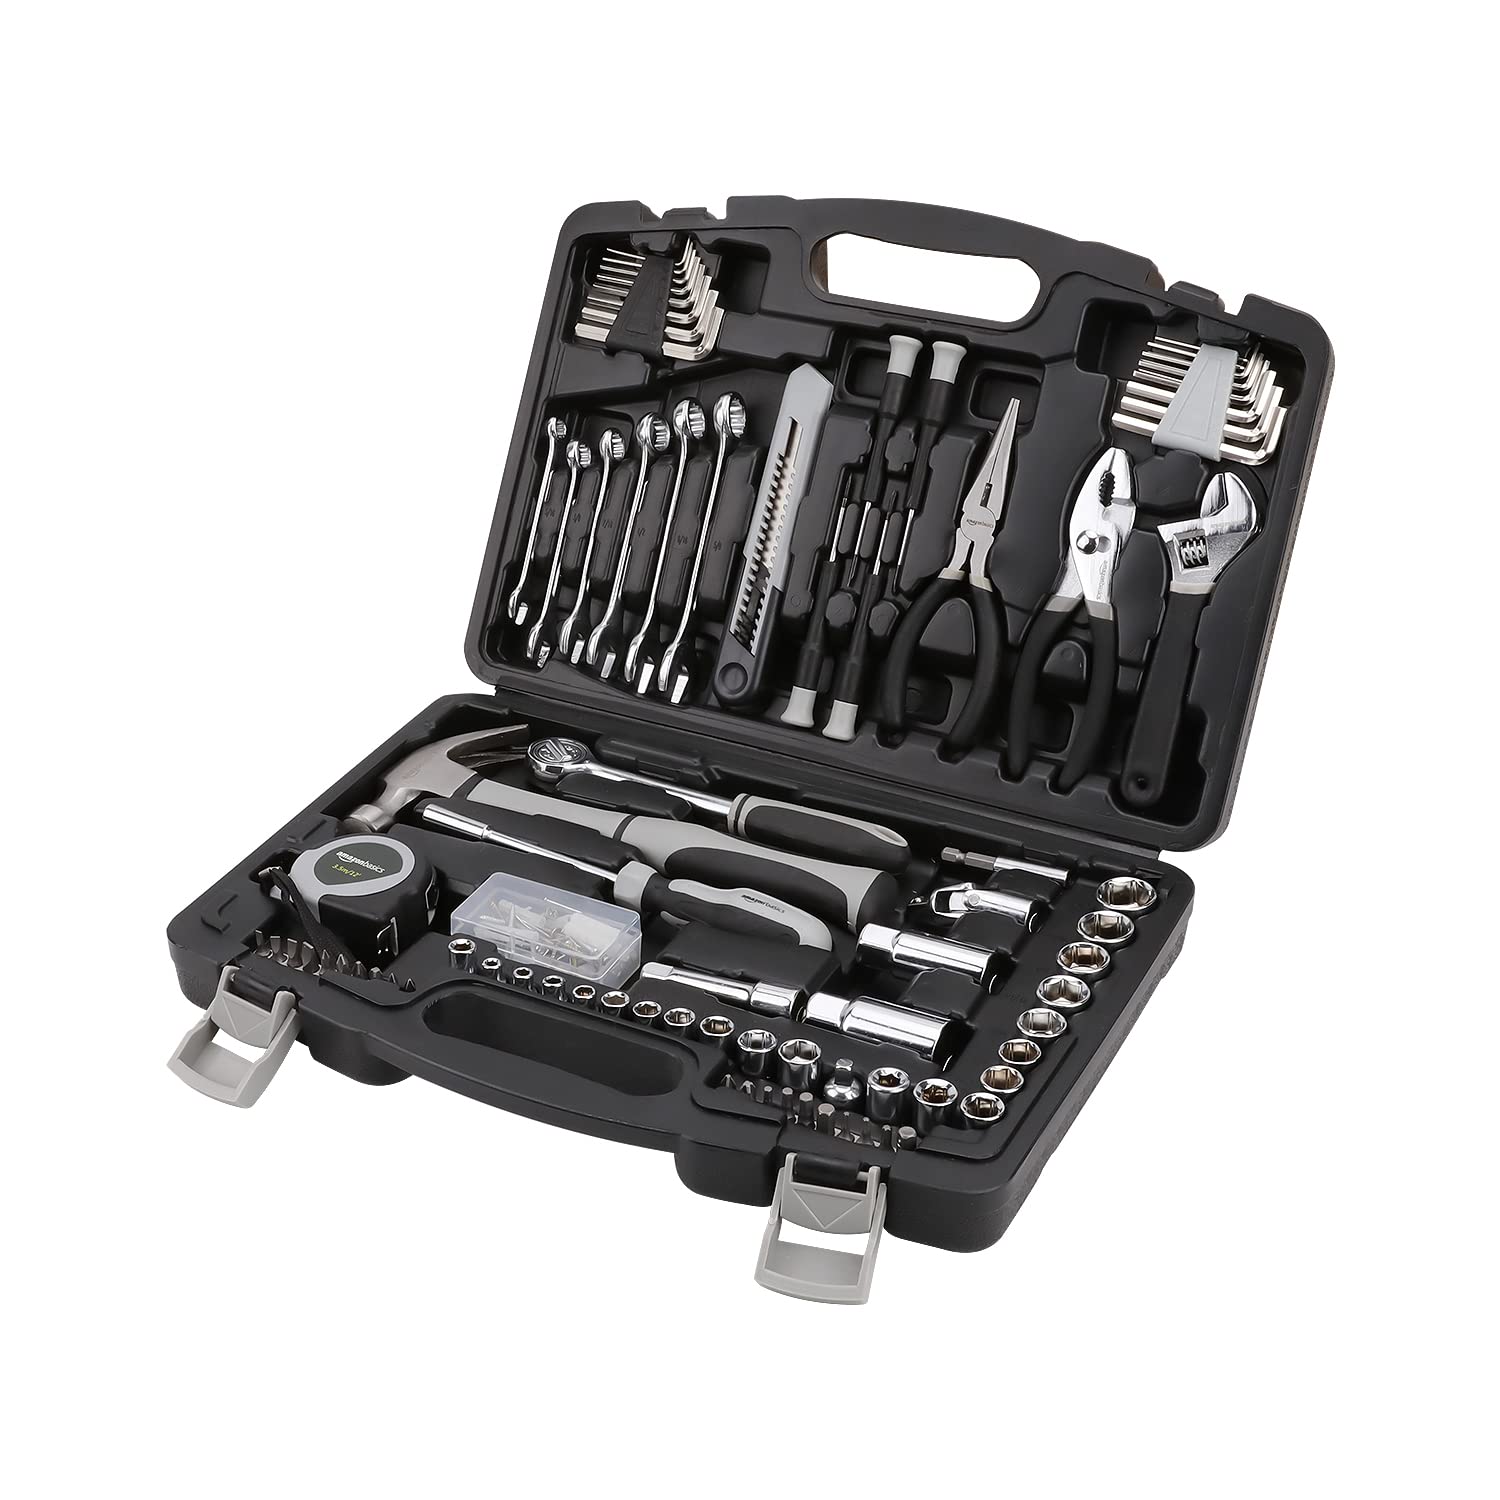 Amazon Basics General Household Home Repair and Mechanic's Hand Tool Kit Set